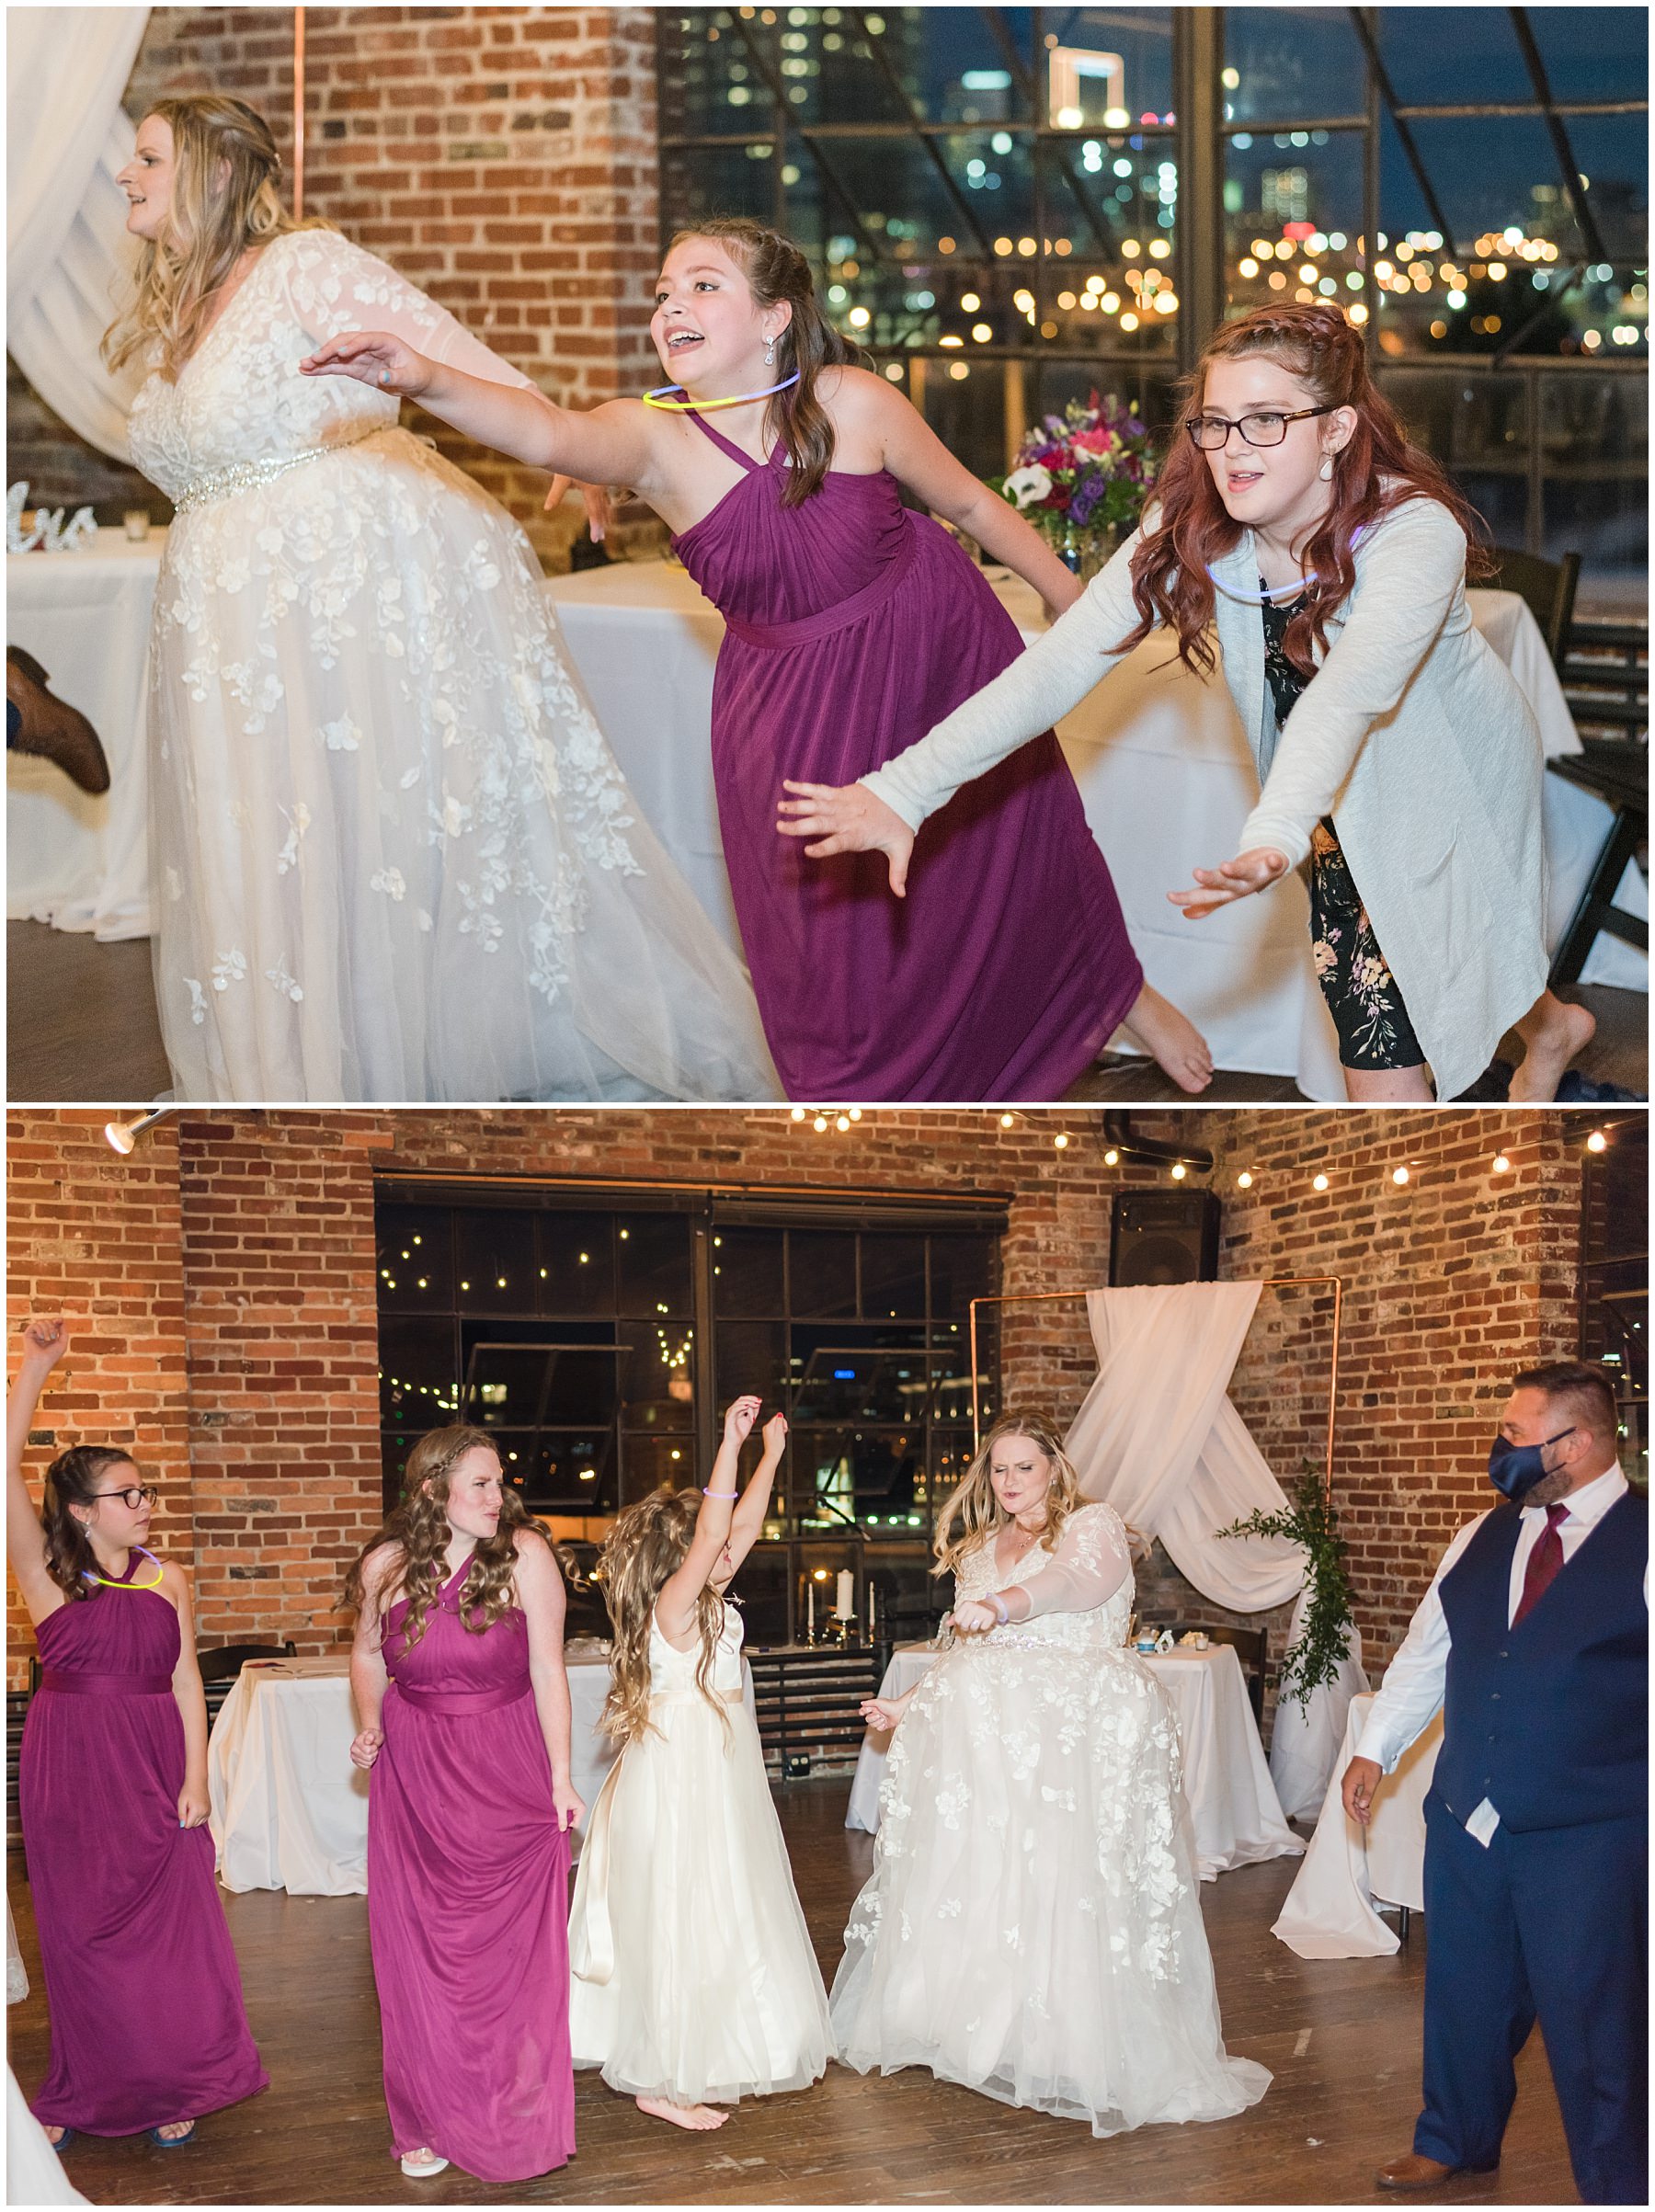 Dancing wedding reception photos at Marathon Village.